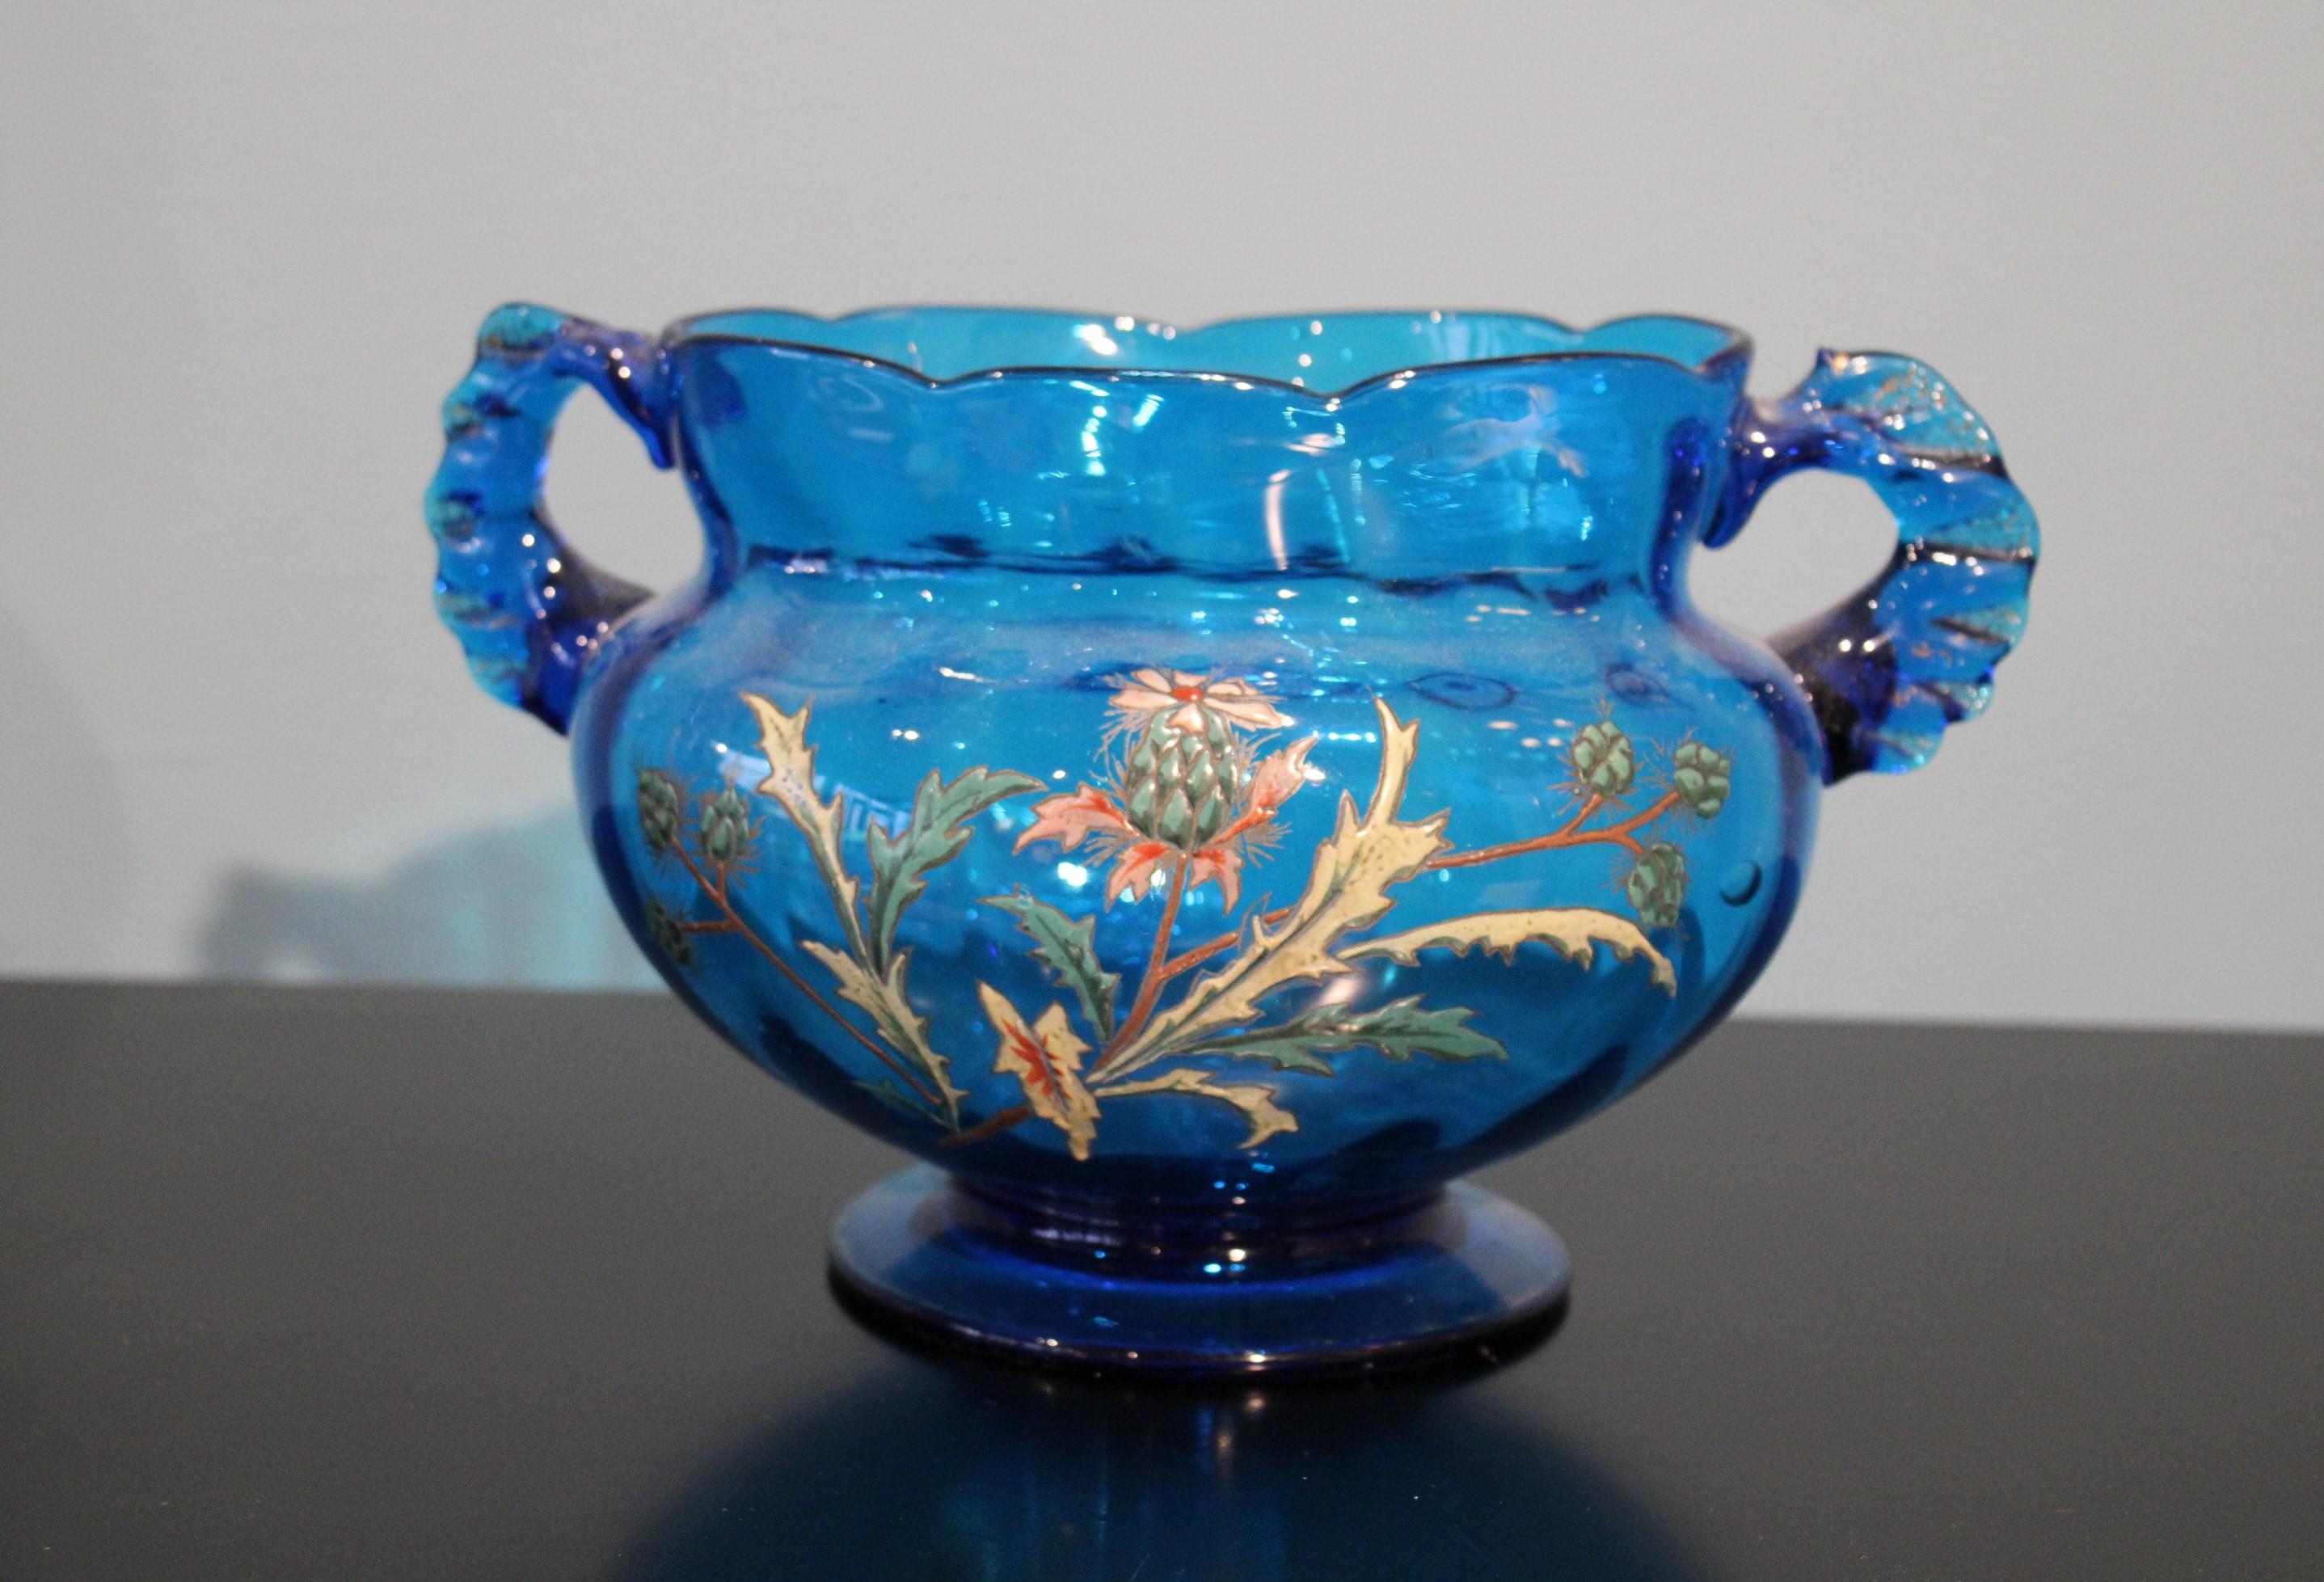 Cup in glass, blue color. 
Art Nouveau style, circa 1900.